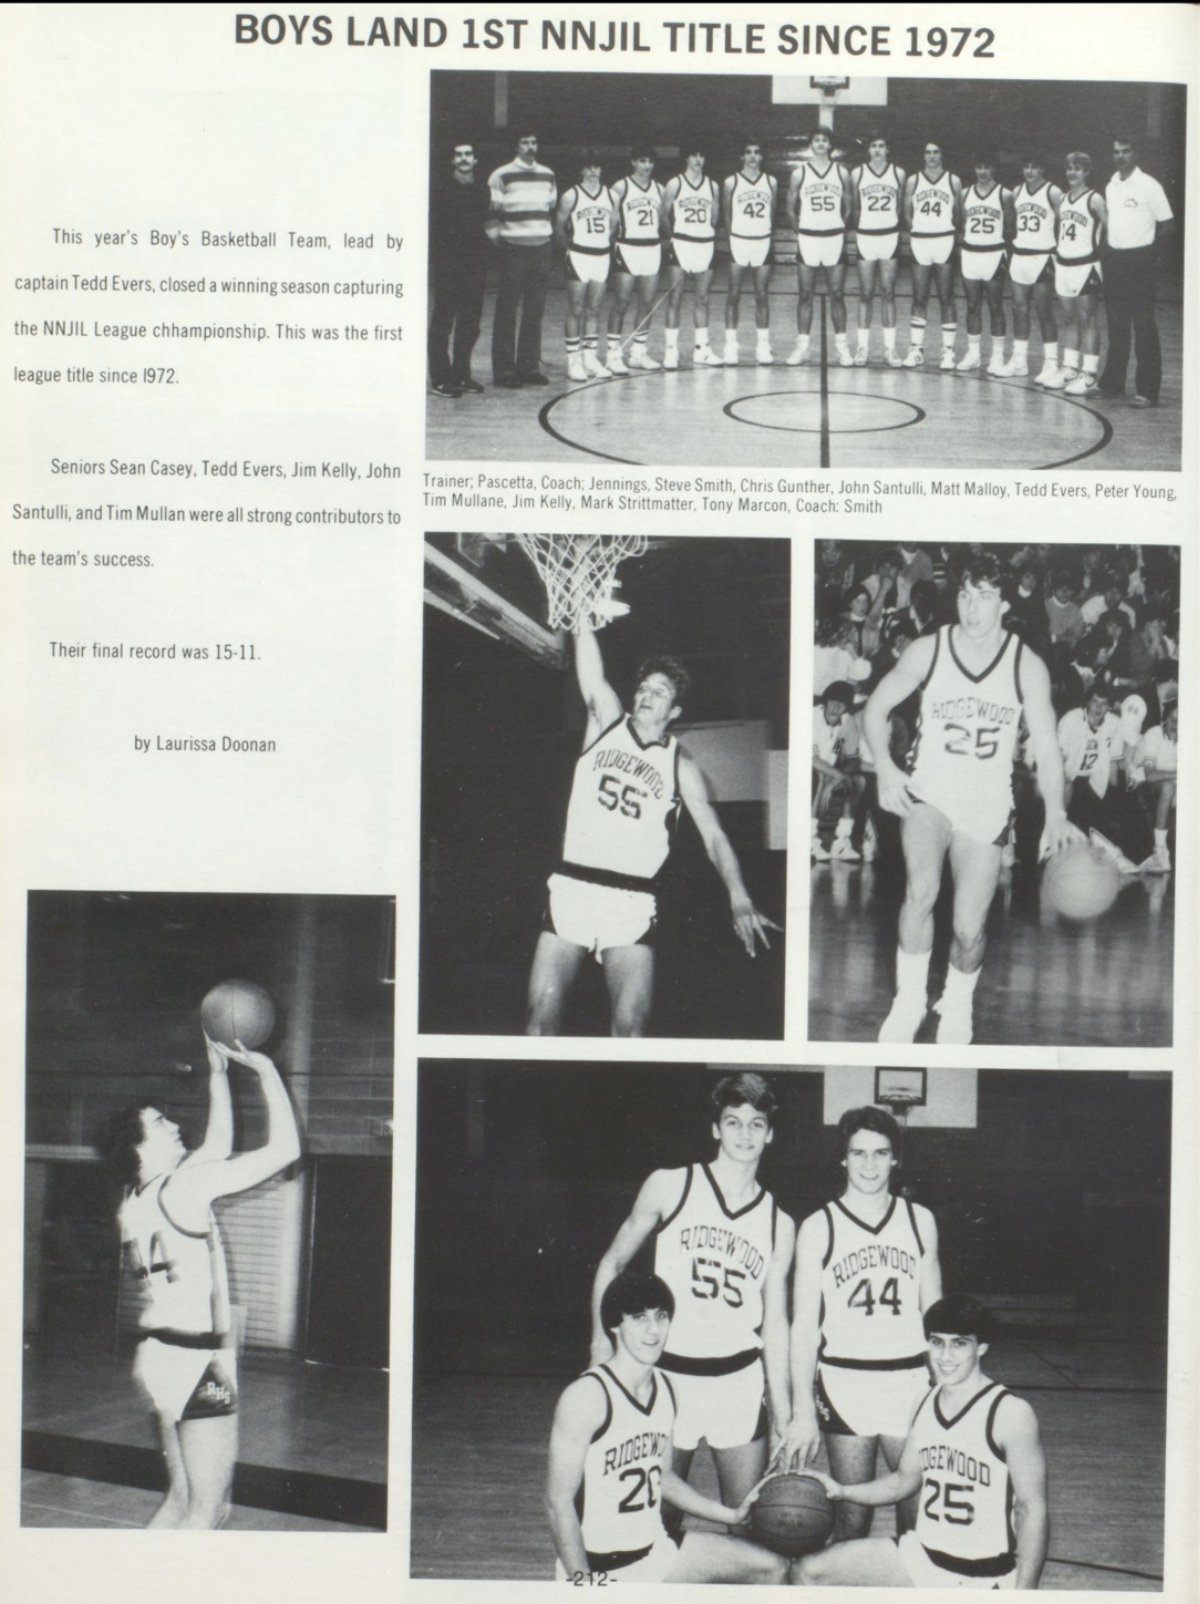 1985 Boys’ Basketball Team